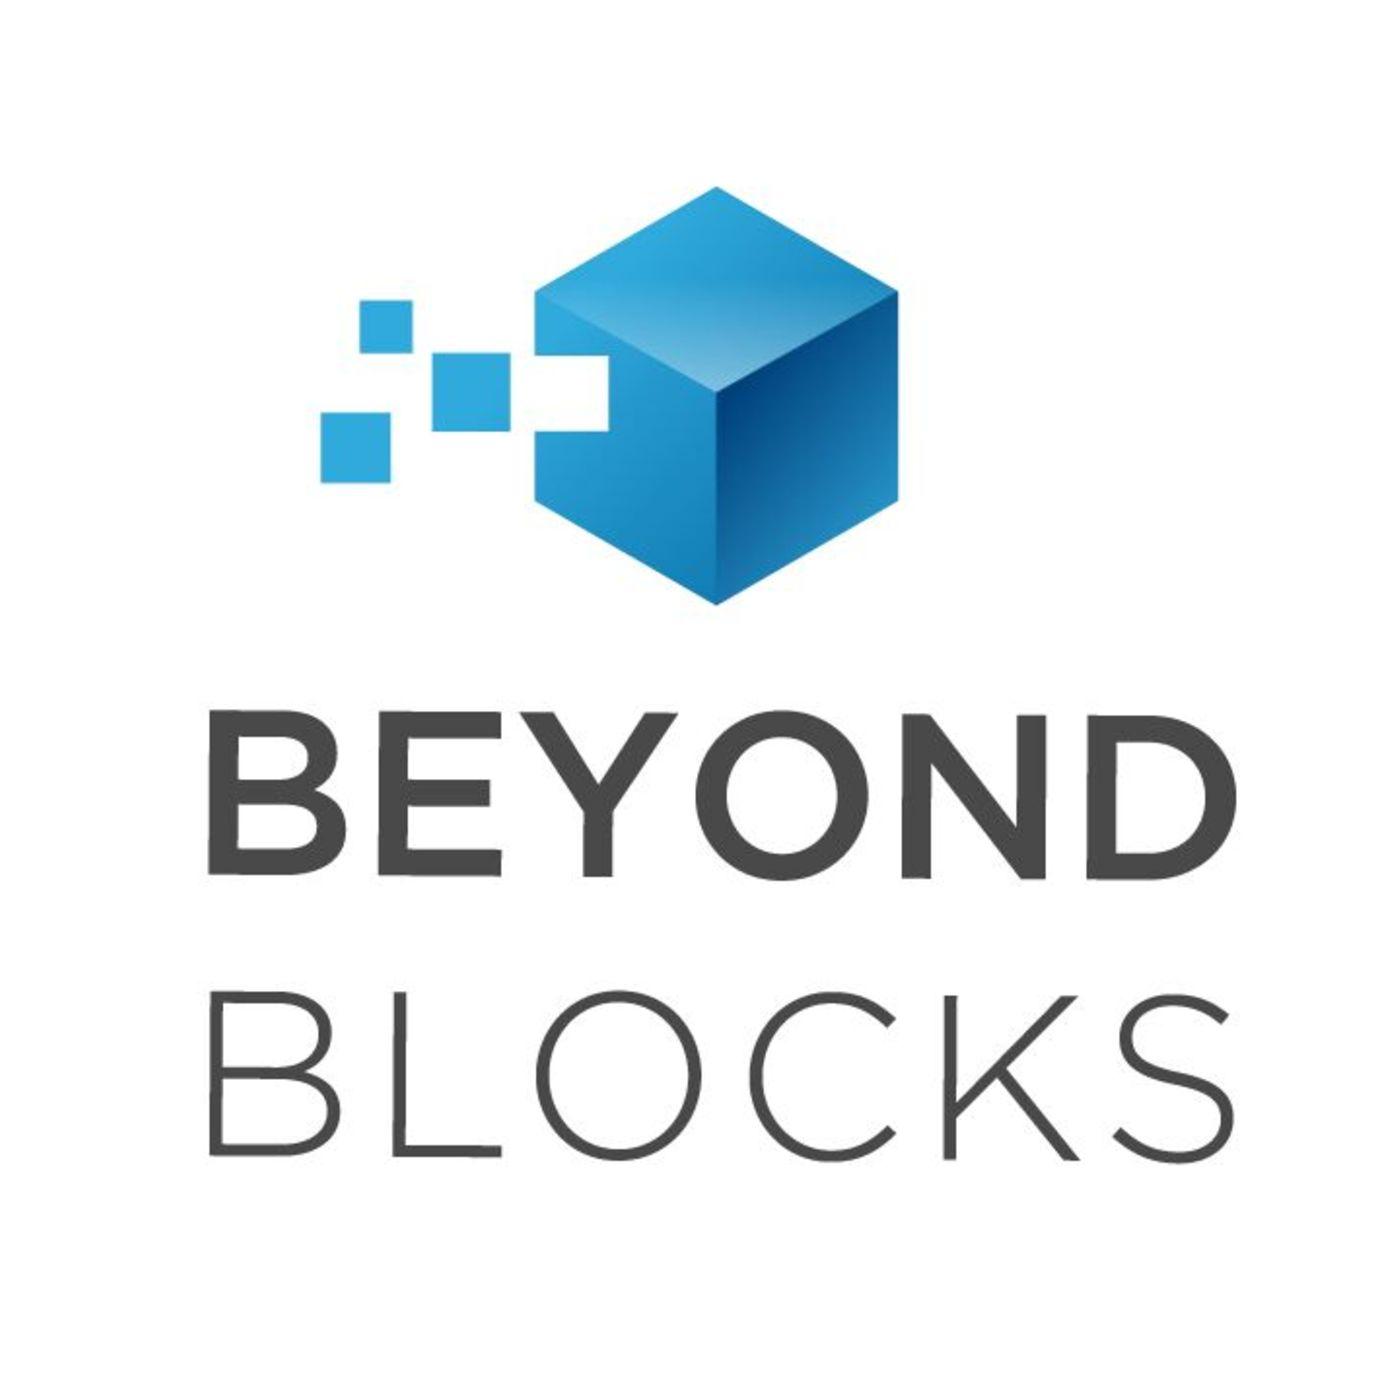 Blue Block S Logo - Beyond Blocks - Connecting Blockchain Enthusiasts